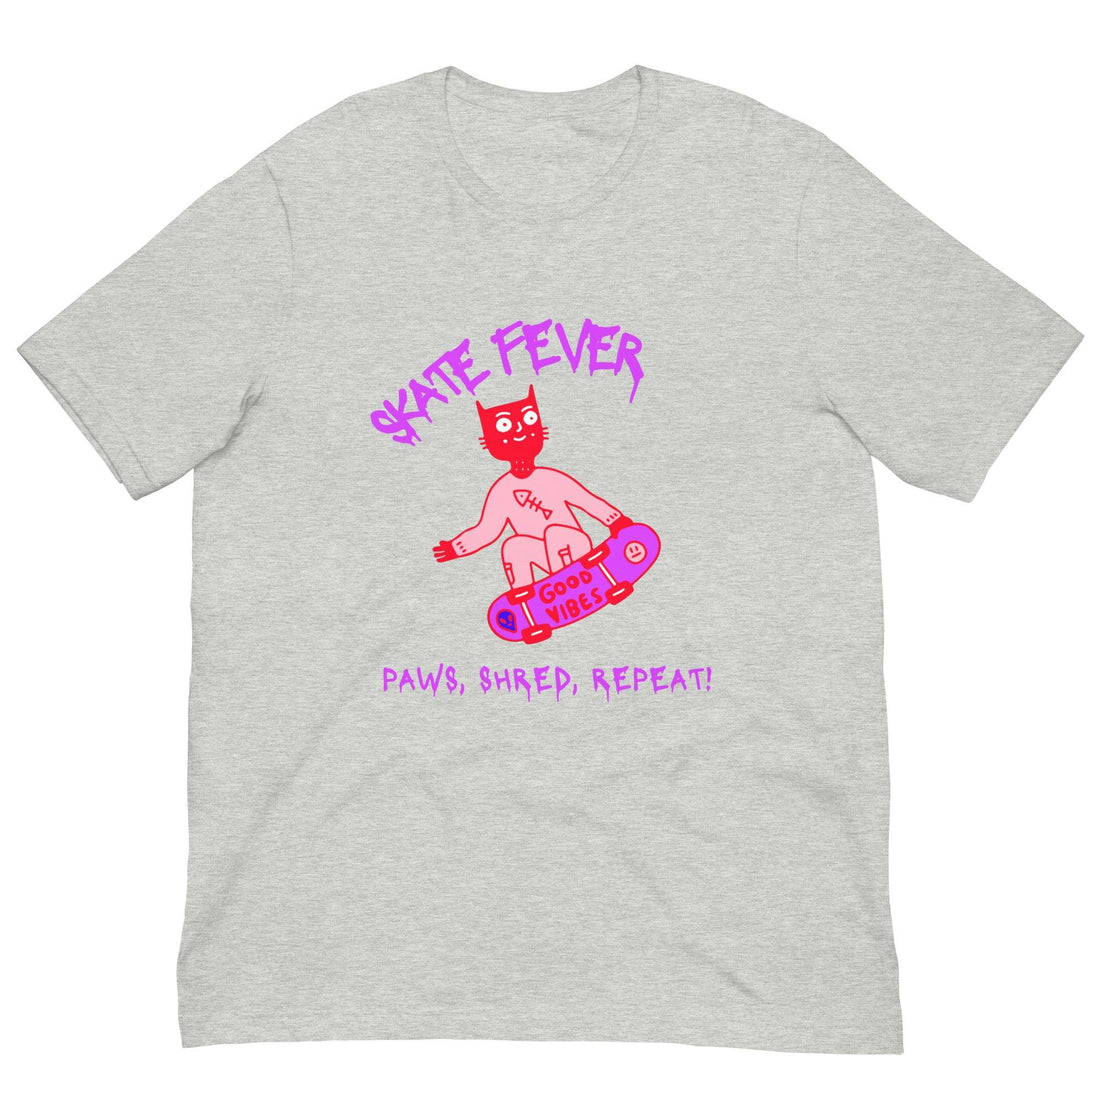 Paws, Shred, Repeat! Cat Shirt - Cat Shirts USA